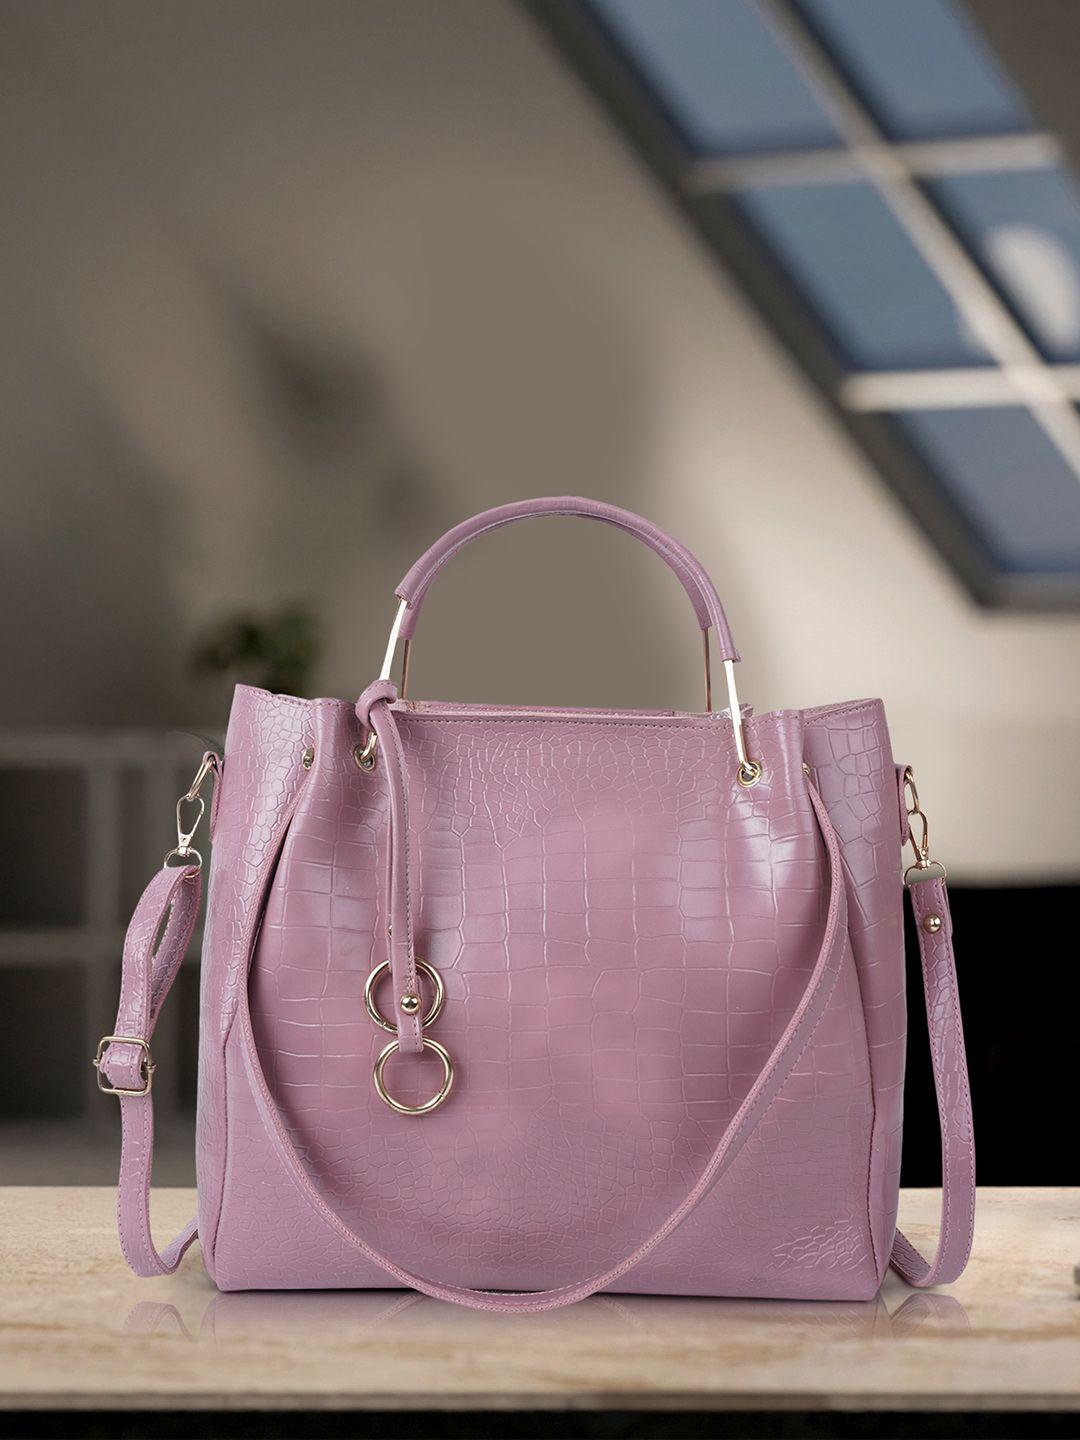 dressberry pink textured structured handheld bag with tasselled